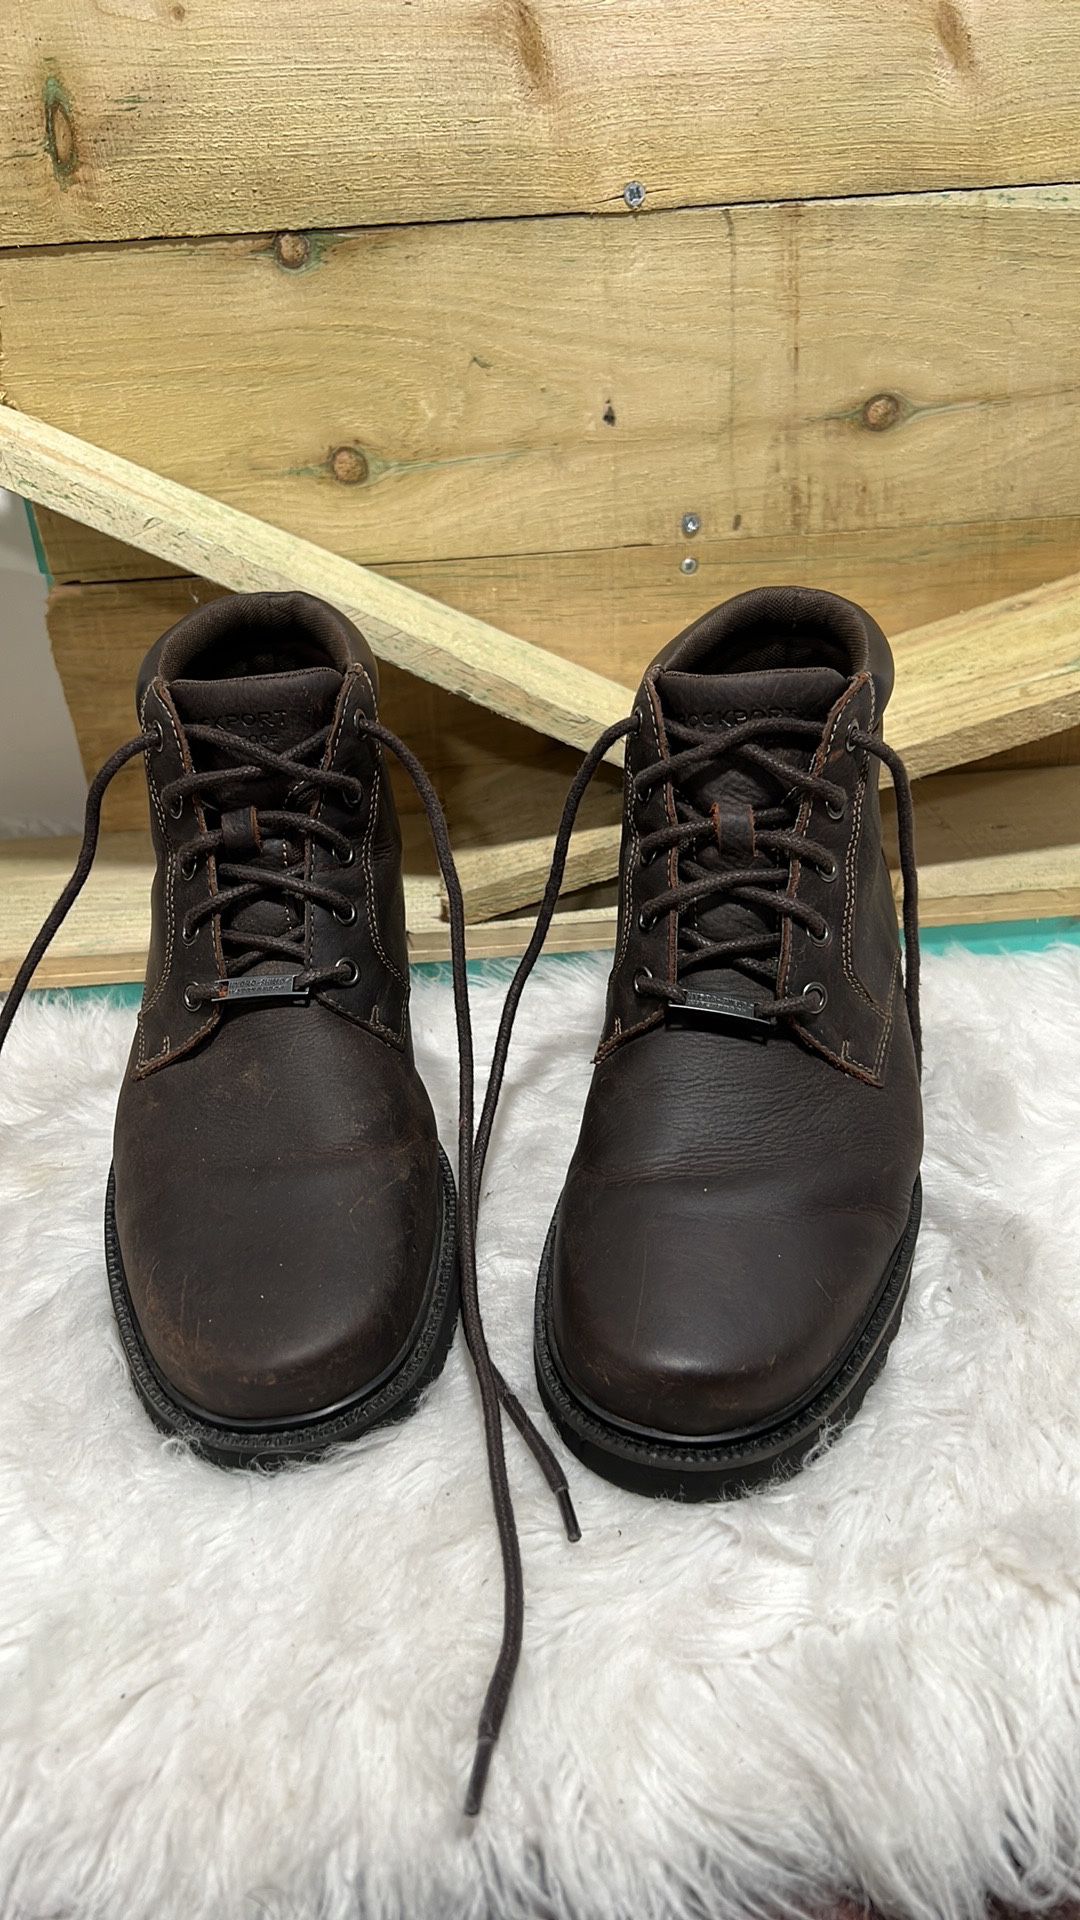 Rockport Northfield Waterproof Plain Toe Boot Chocolate Men's Sz 9.5 M - V75788 